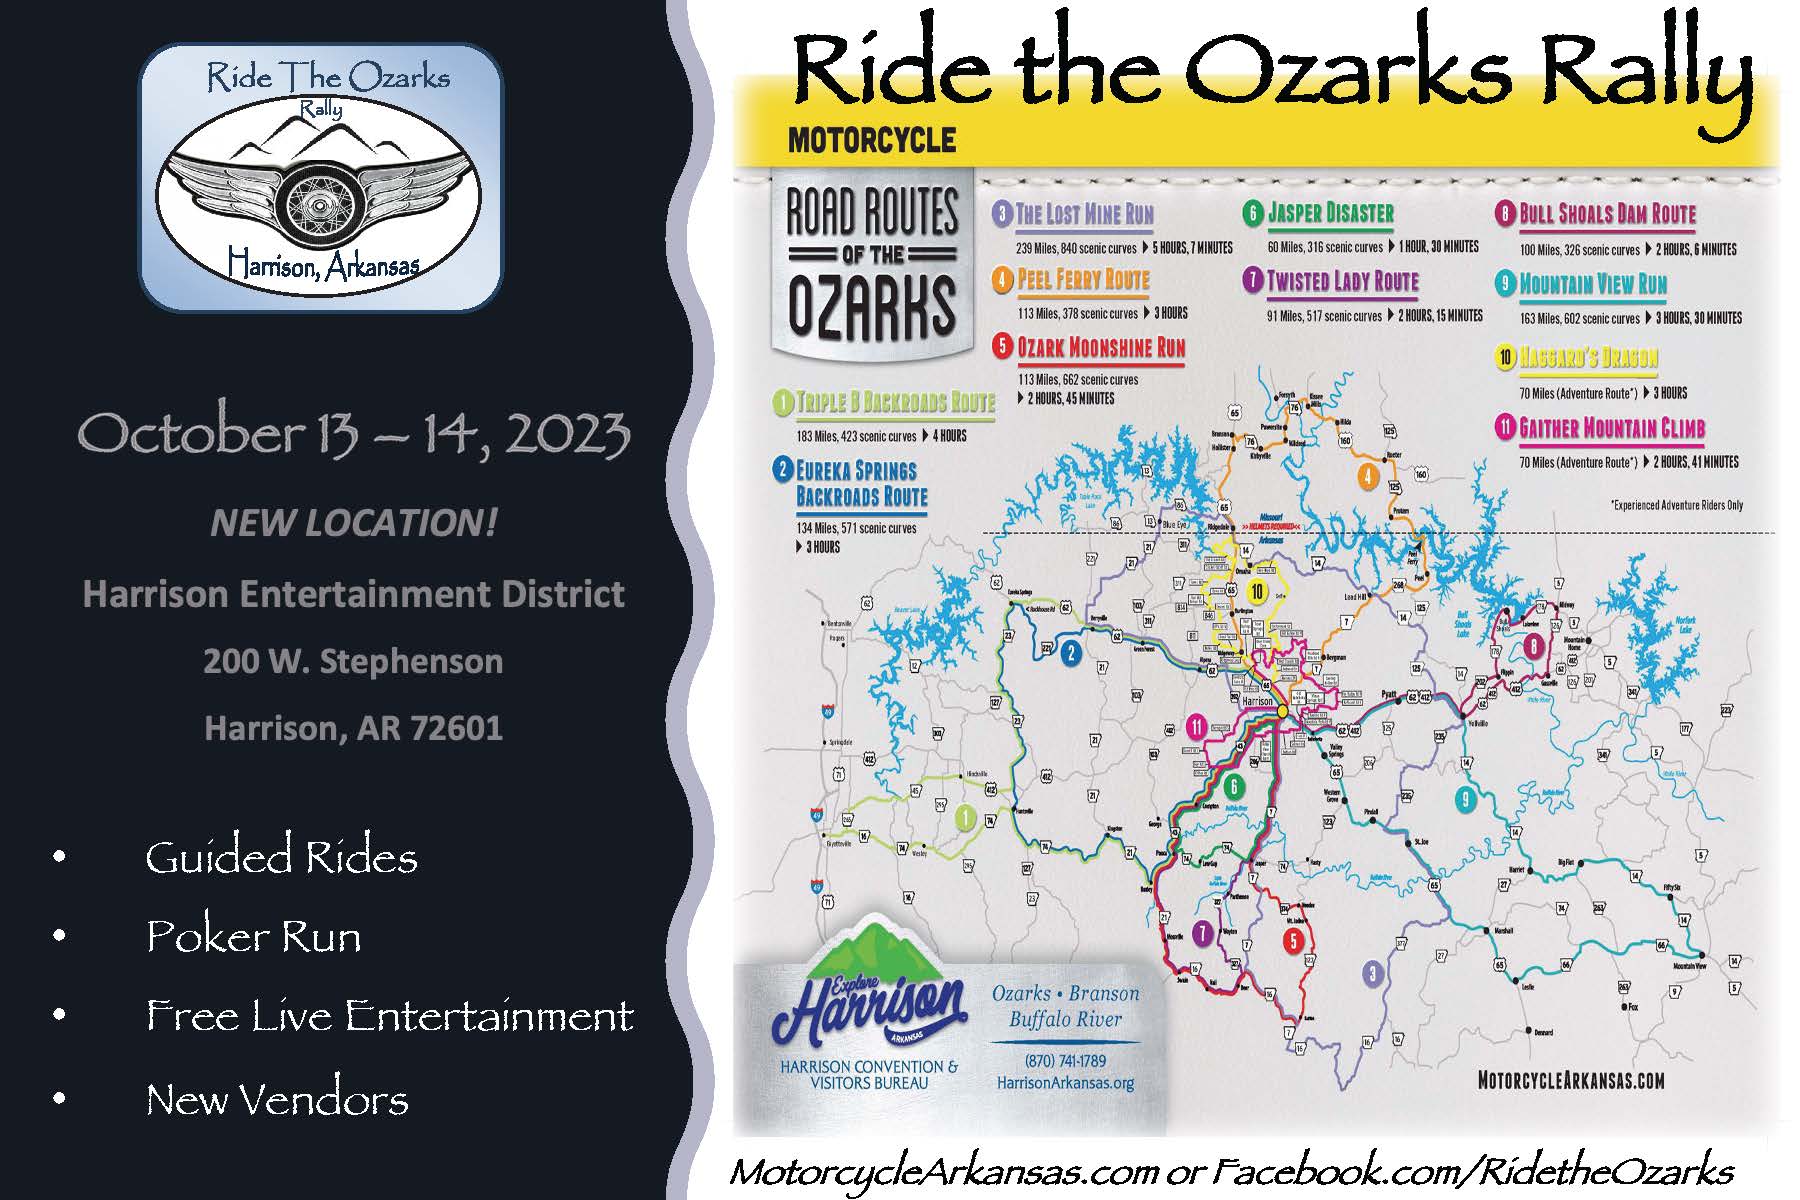 Ride the Ozarks Rally Harrison Convention & Visitors Bureau